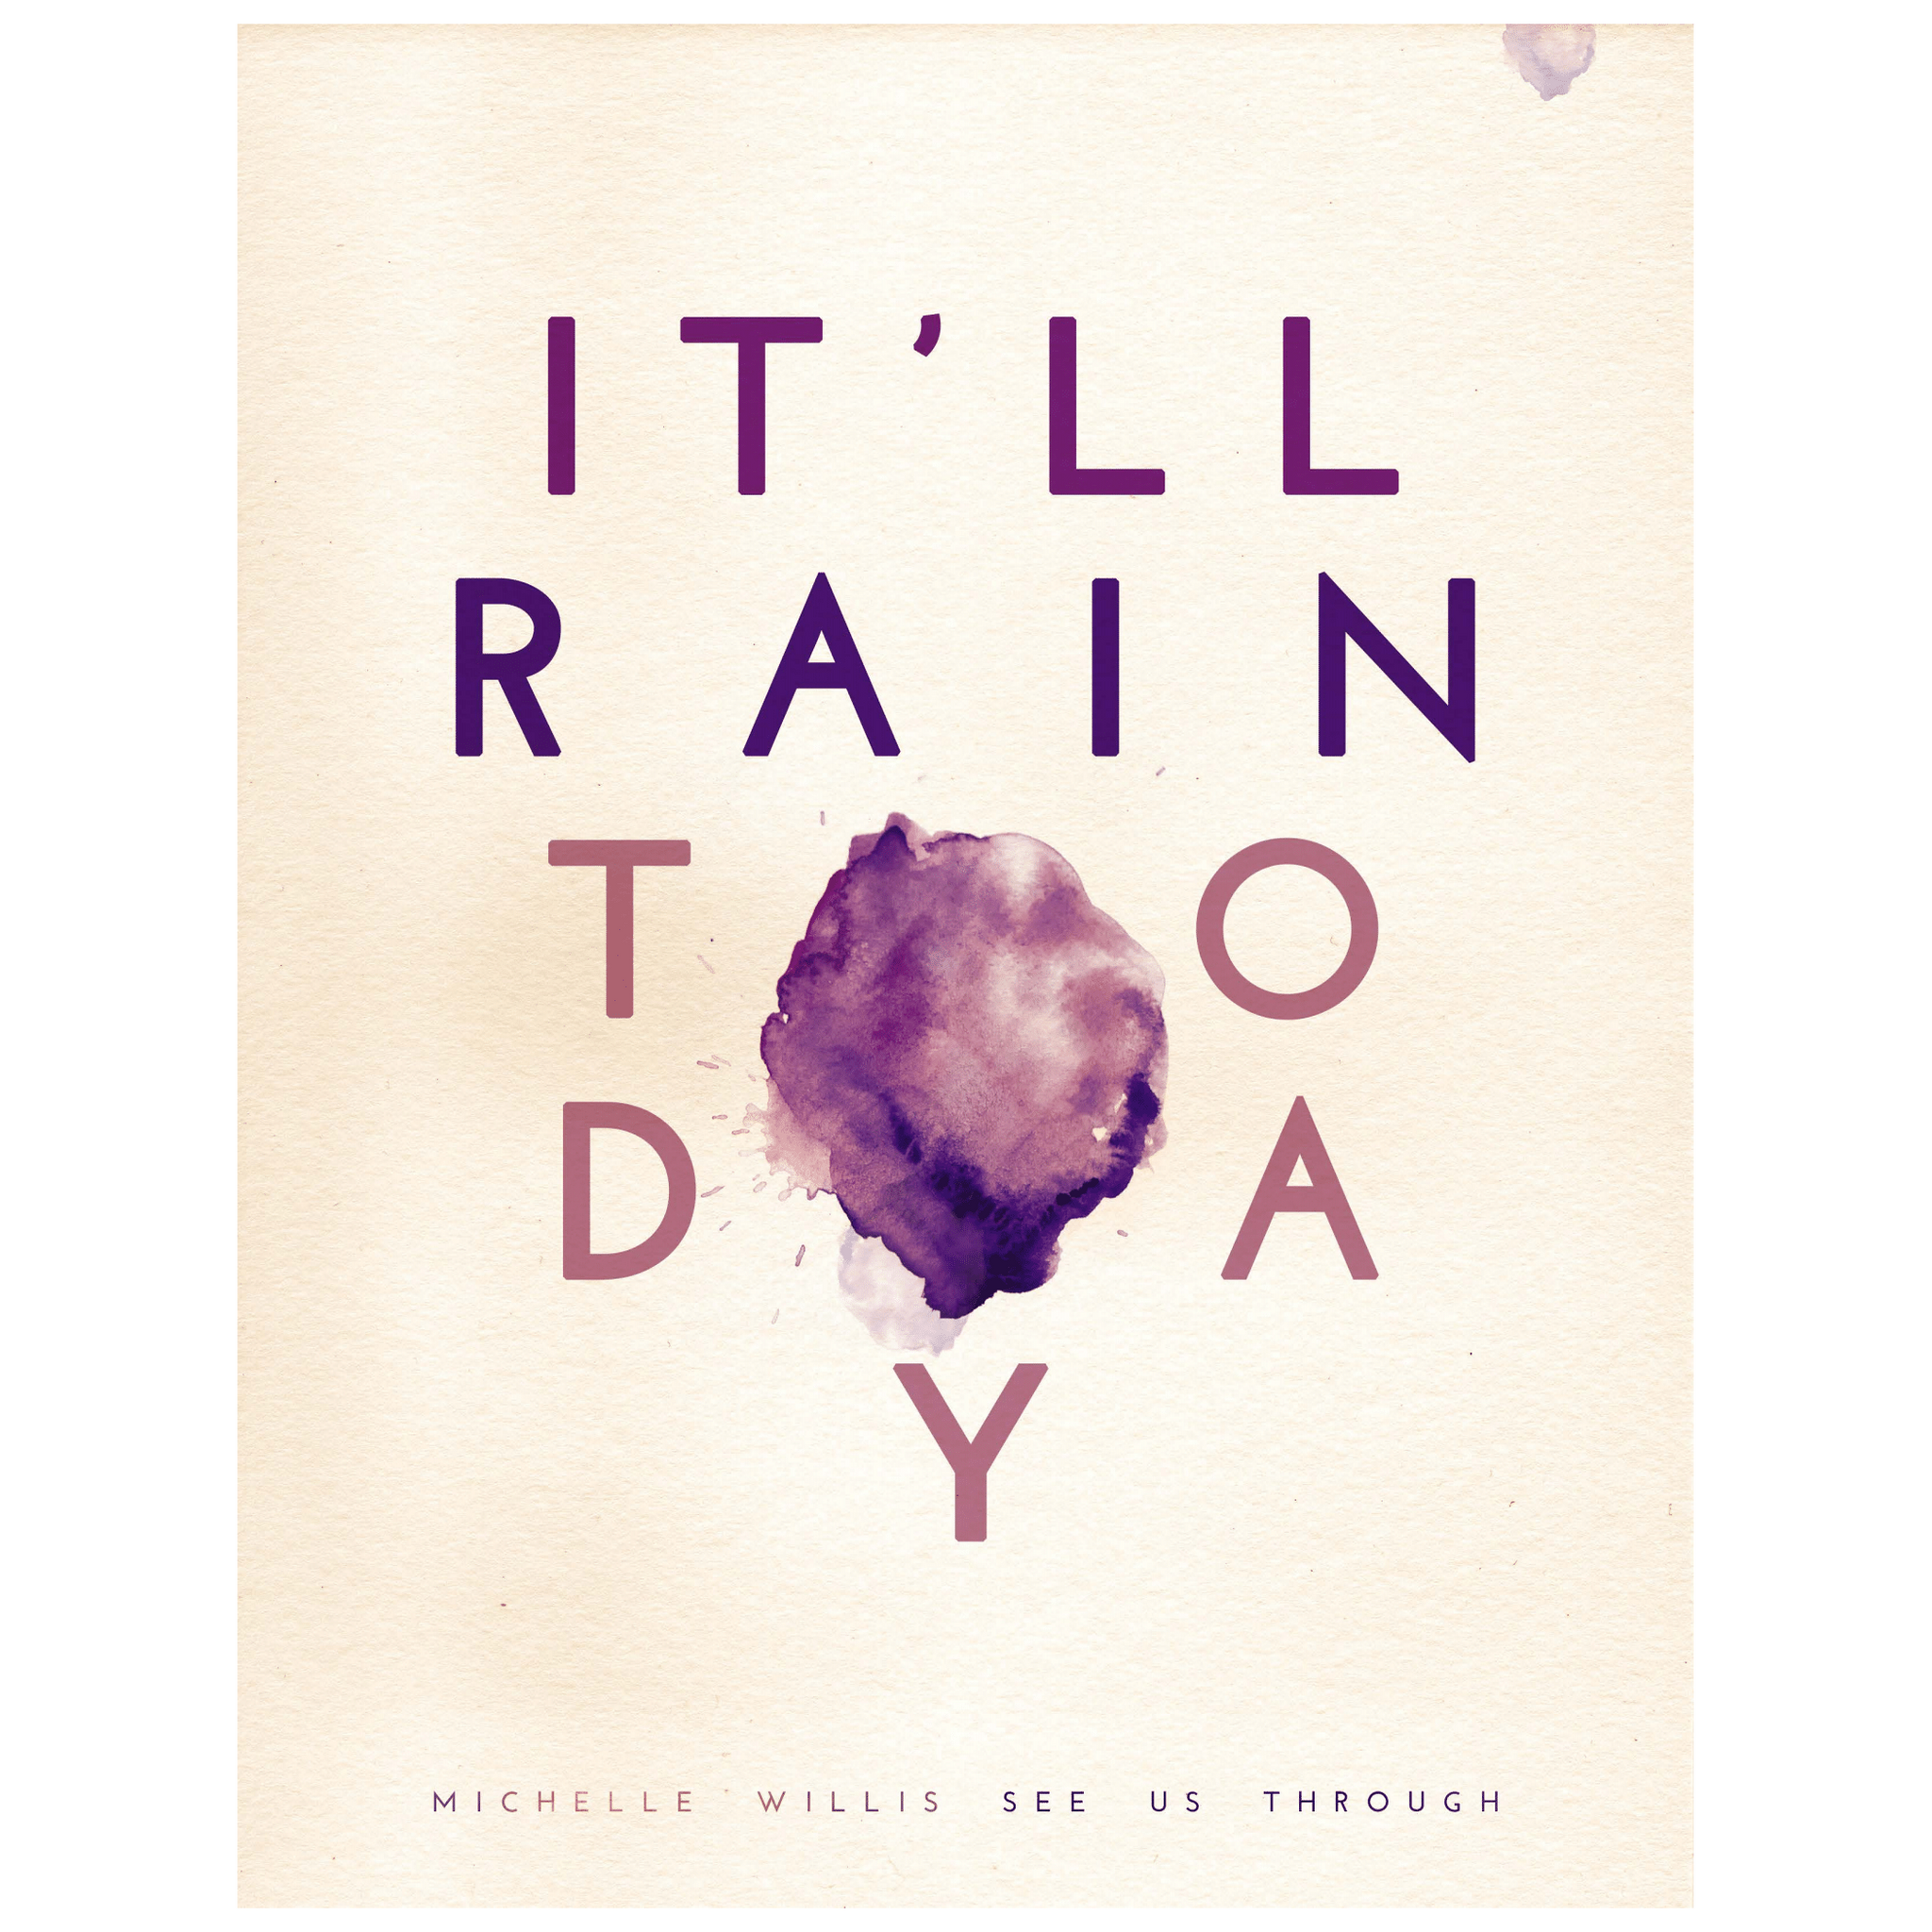 Sheet Music: It'll Rain Today [Digital Download]